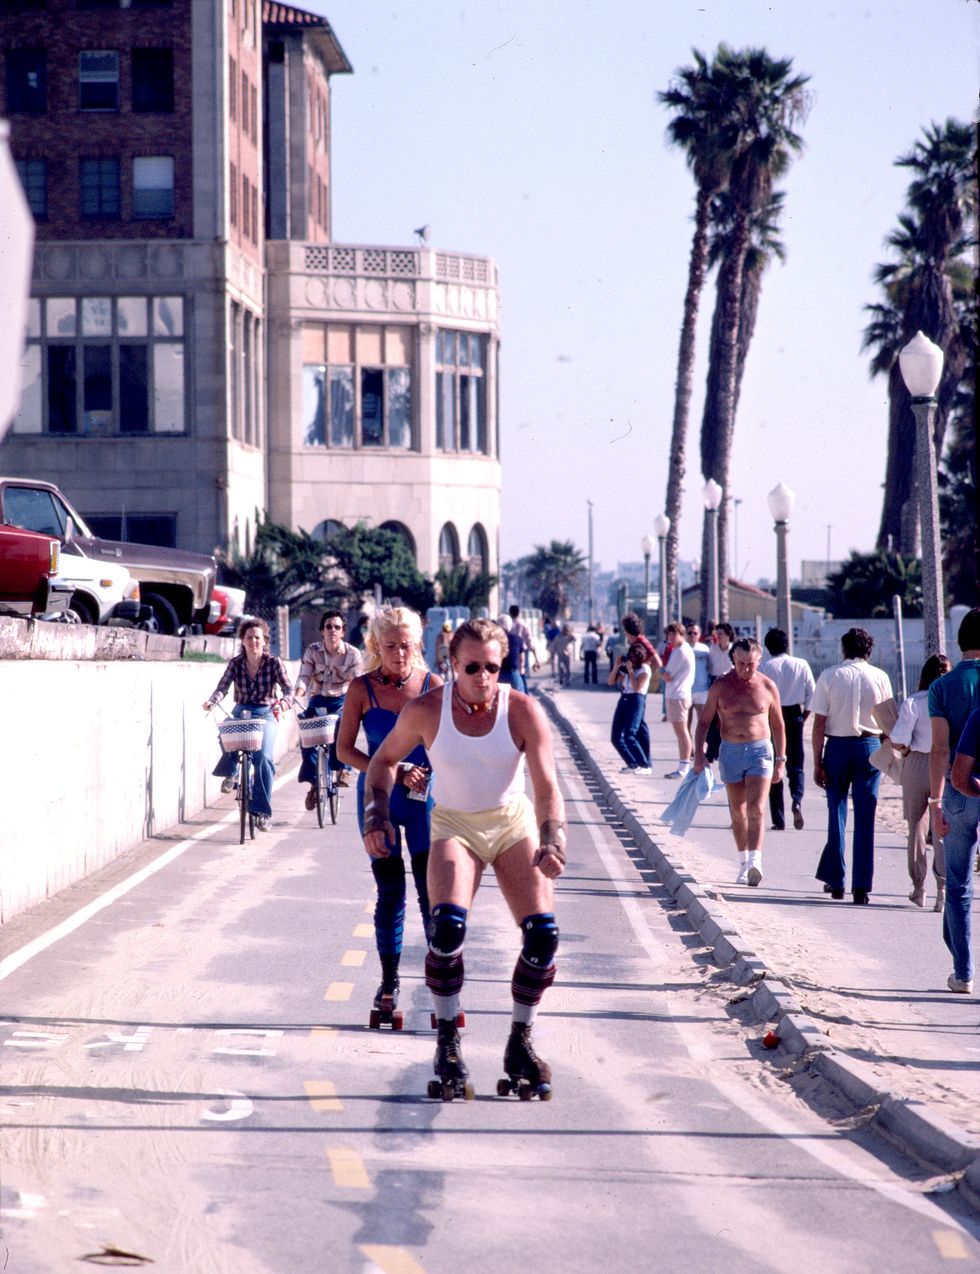 venice beach ca nov 21 roller skaters, cyclists and walkers on the boardwalk november 21, 1982 venice beach, california los angeles, california photo paul harrisgetty images